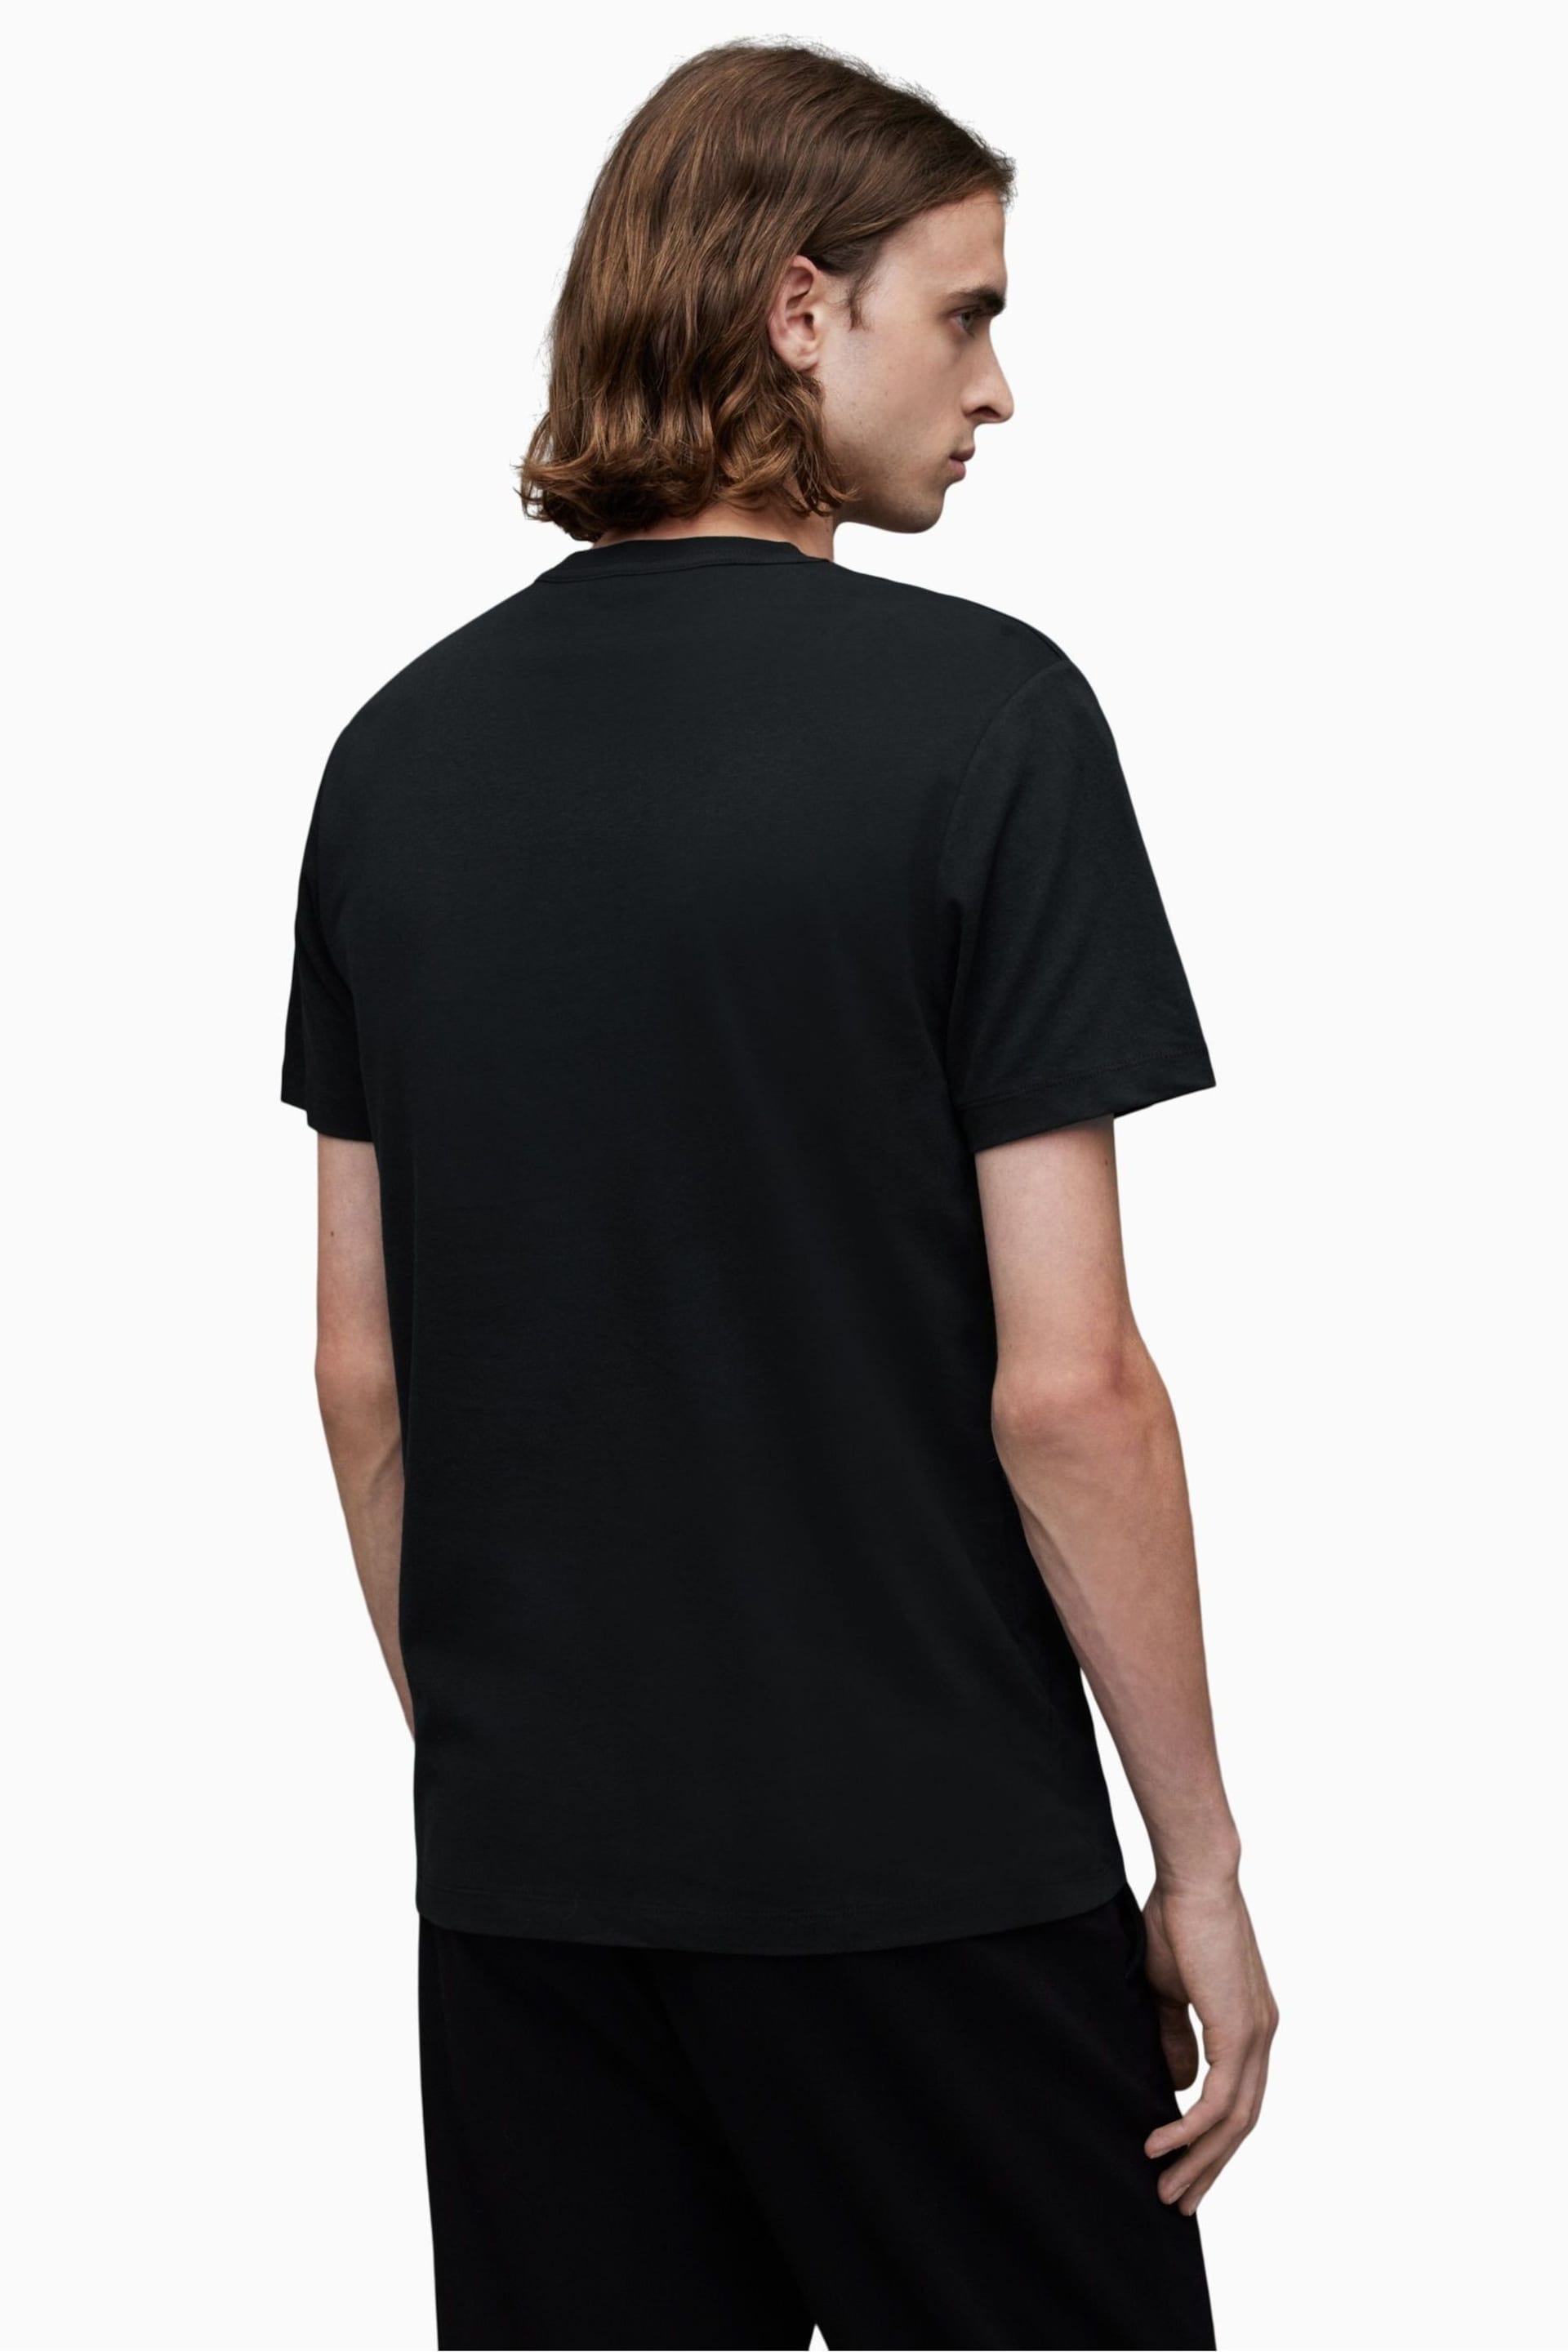 AllSaints Black Brace Crew T-Shirts 3 Pack - Image 3 of 7